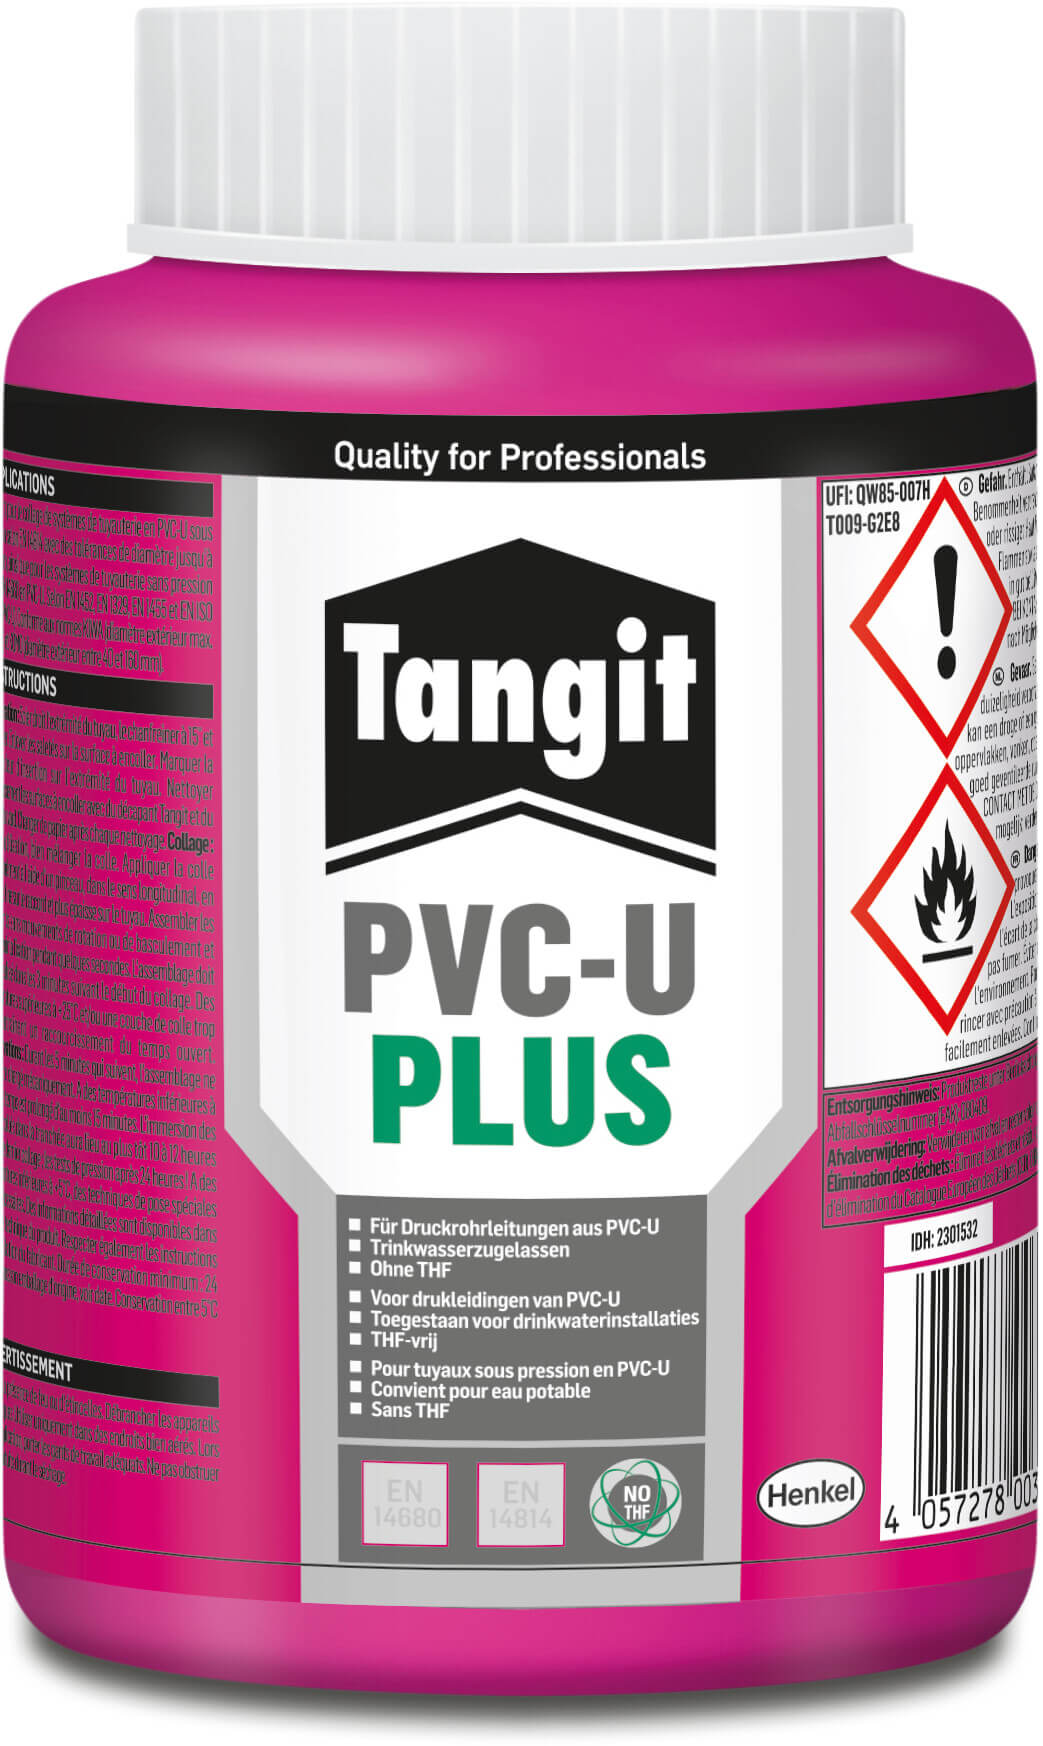 Tangit PVC-lijm 500g type Plus THF free label DE/NL/FR